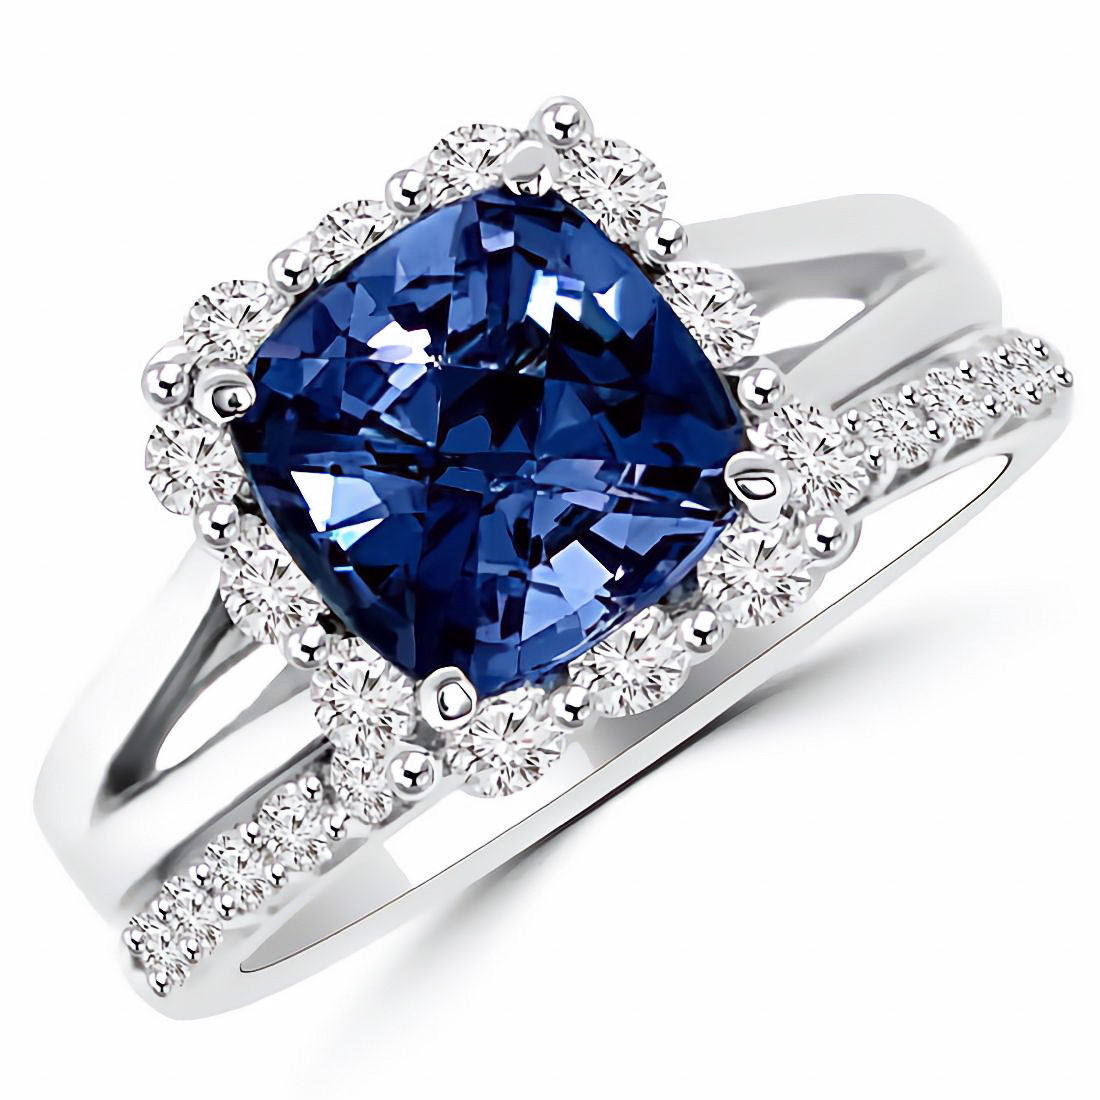 Cushion-Cut Blue Sapphire Diamond Engagement Ring Set